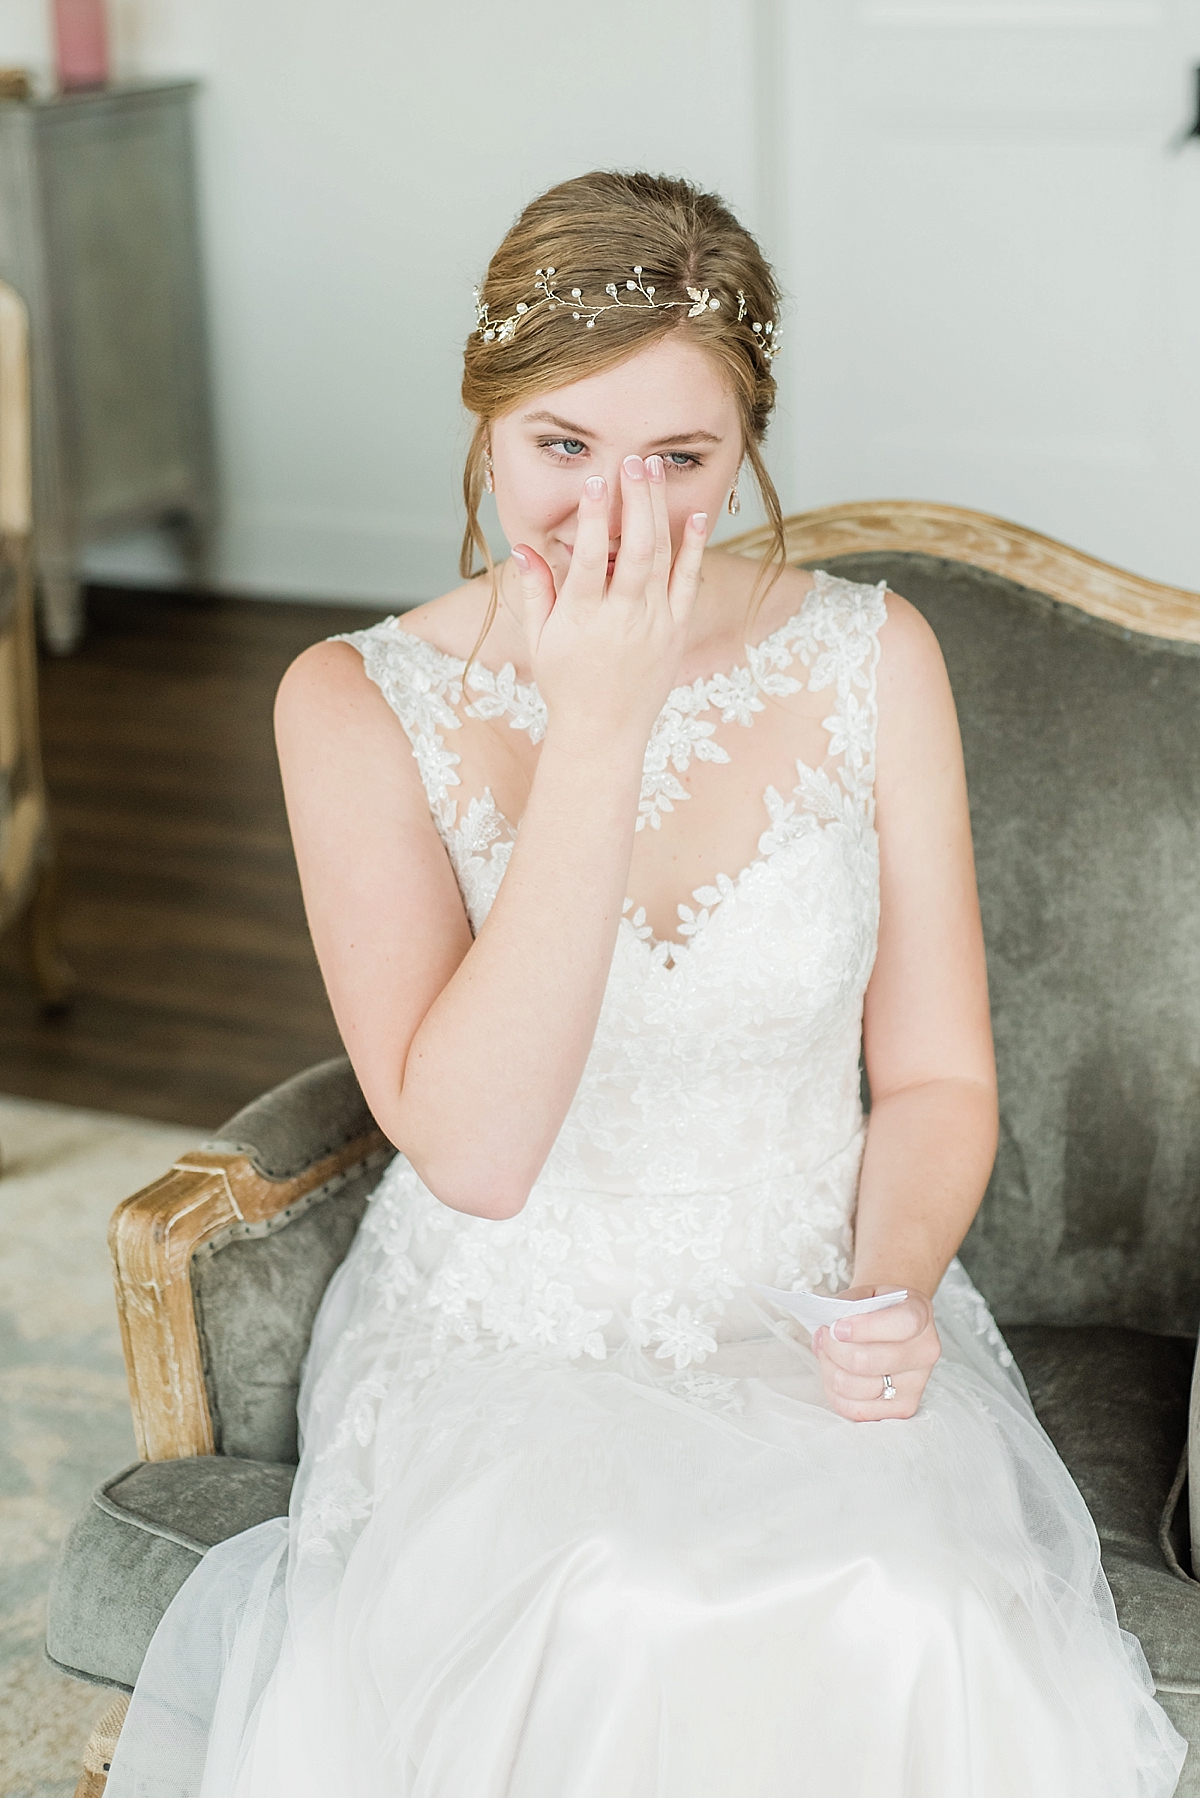 Deep in the Heart Farms Wedding by Houston photographers Eric & Jenn Photography